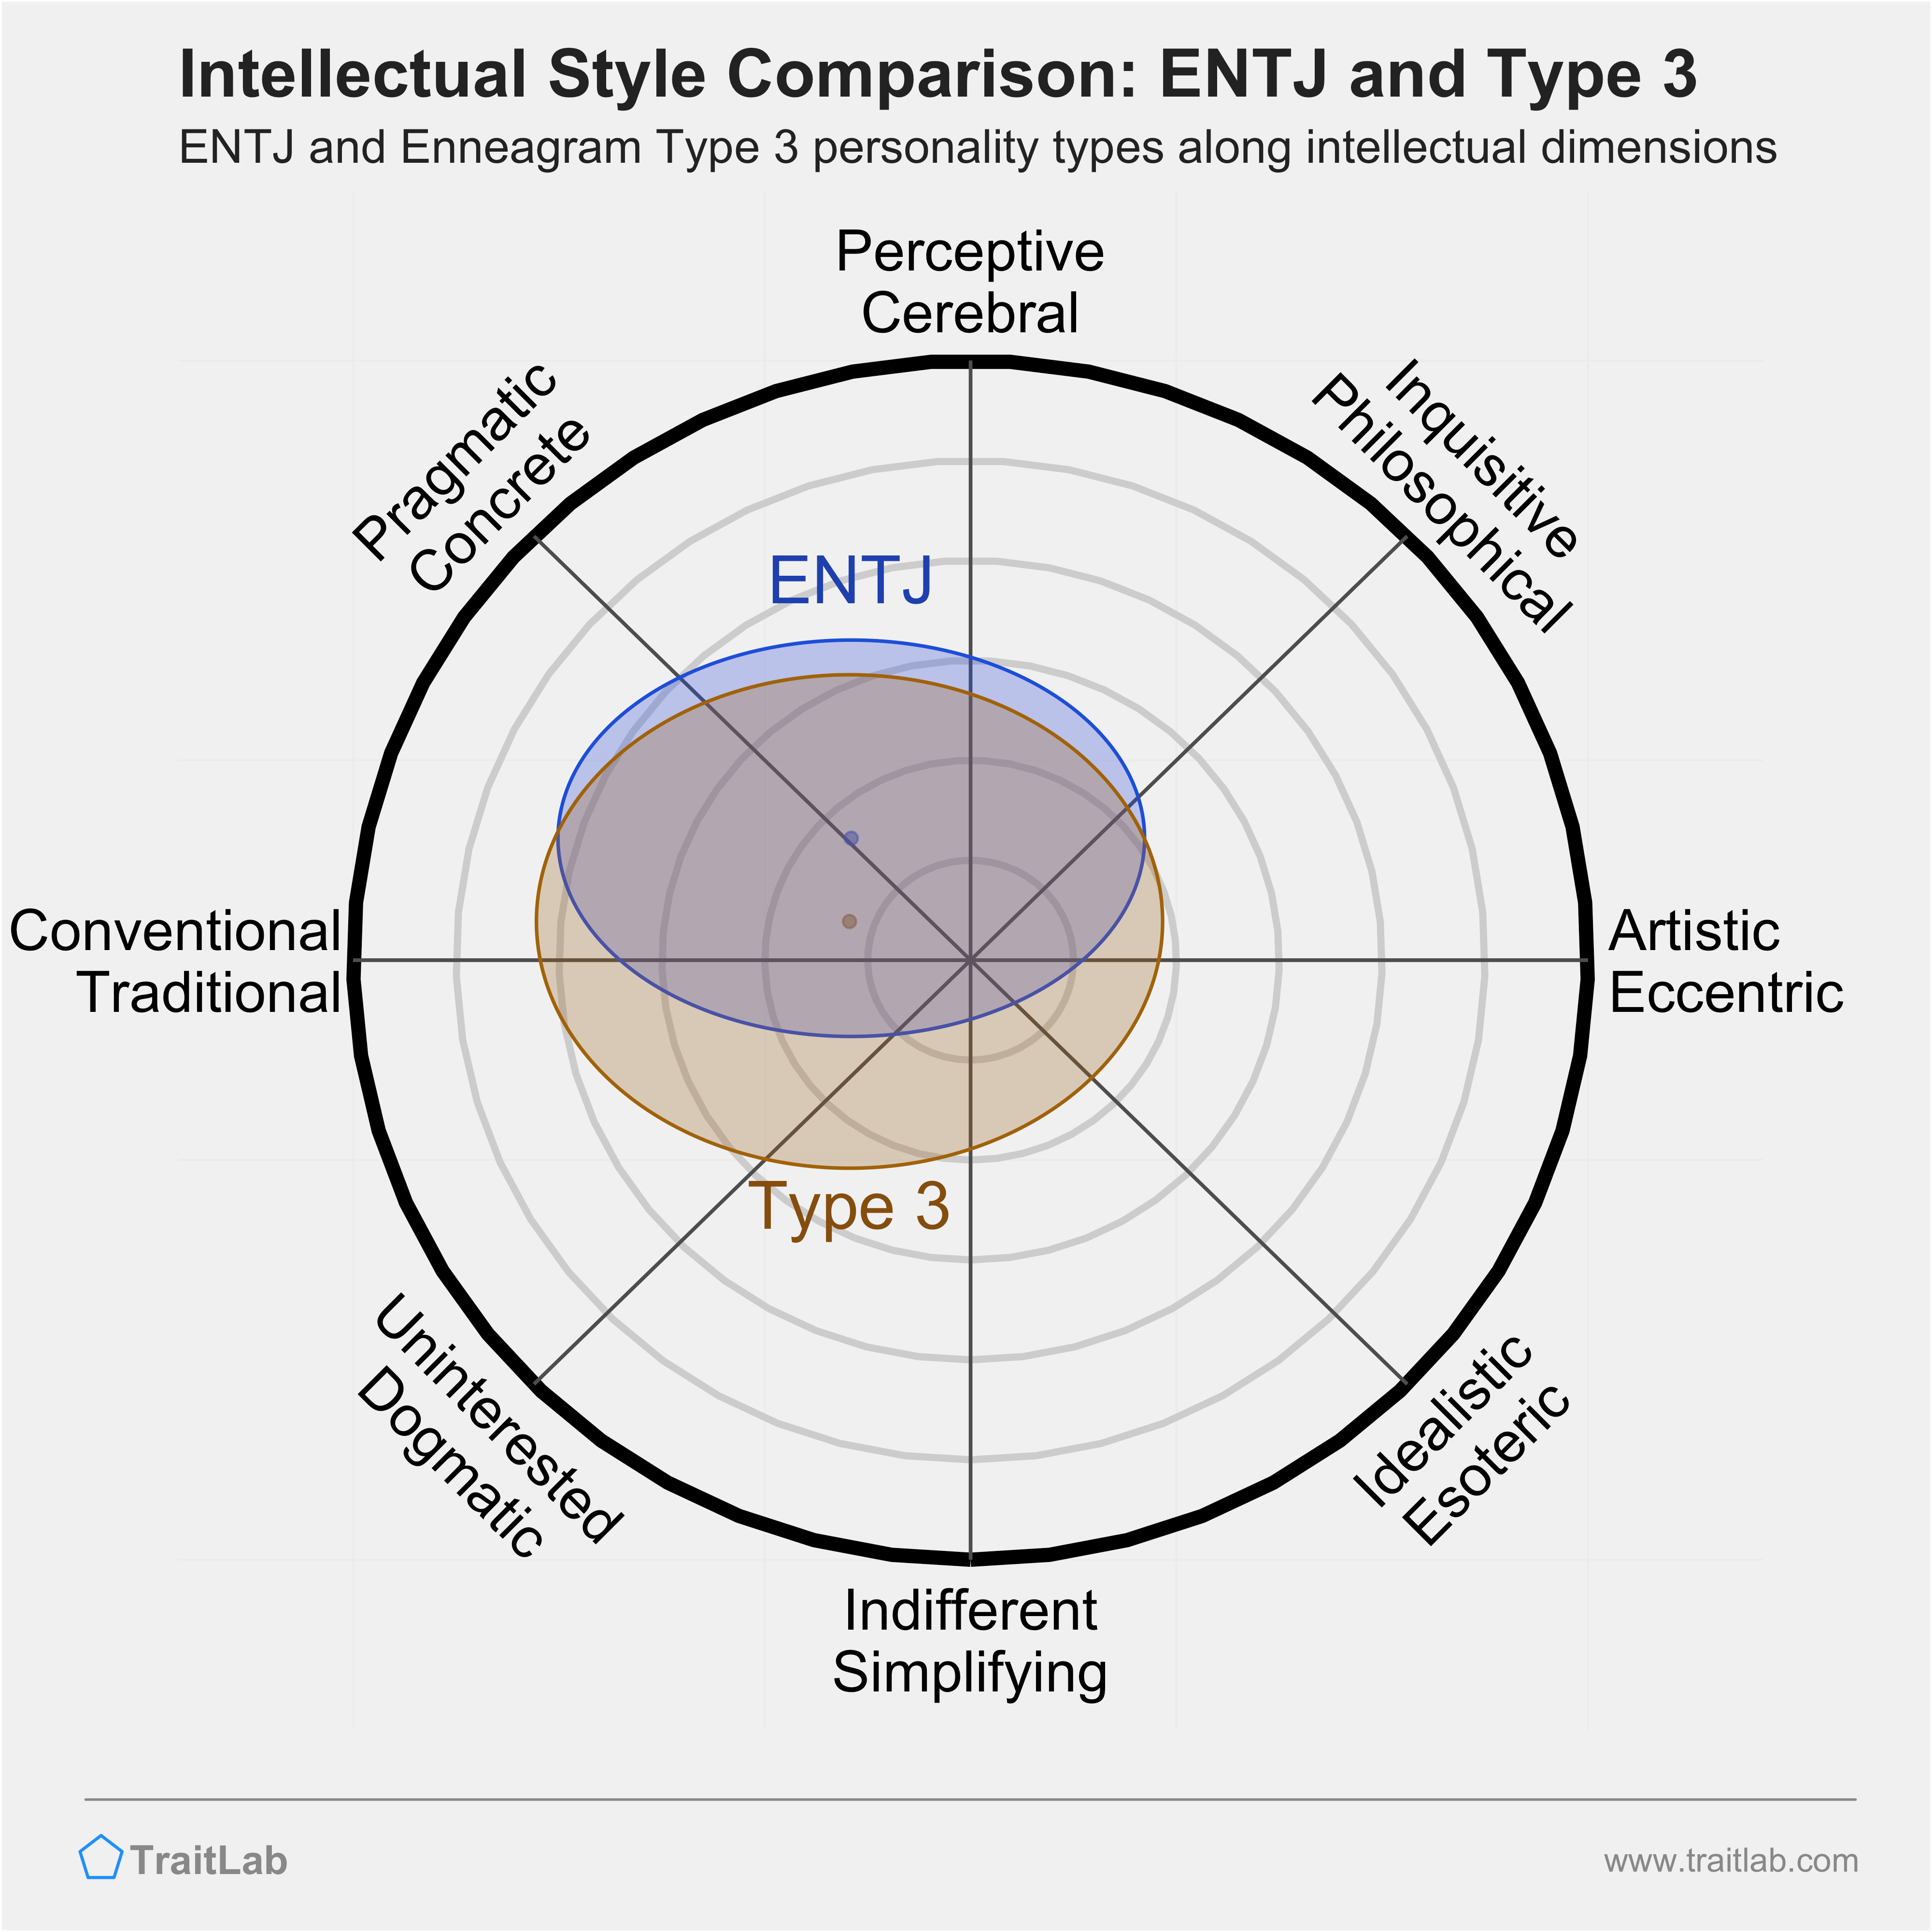 ENTJ and Type 3 comparison across intellectual dimensions